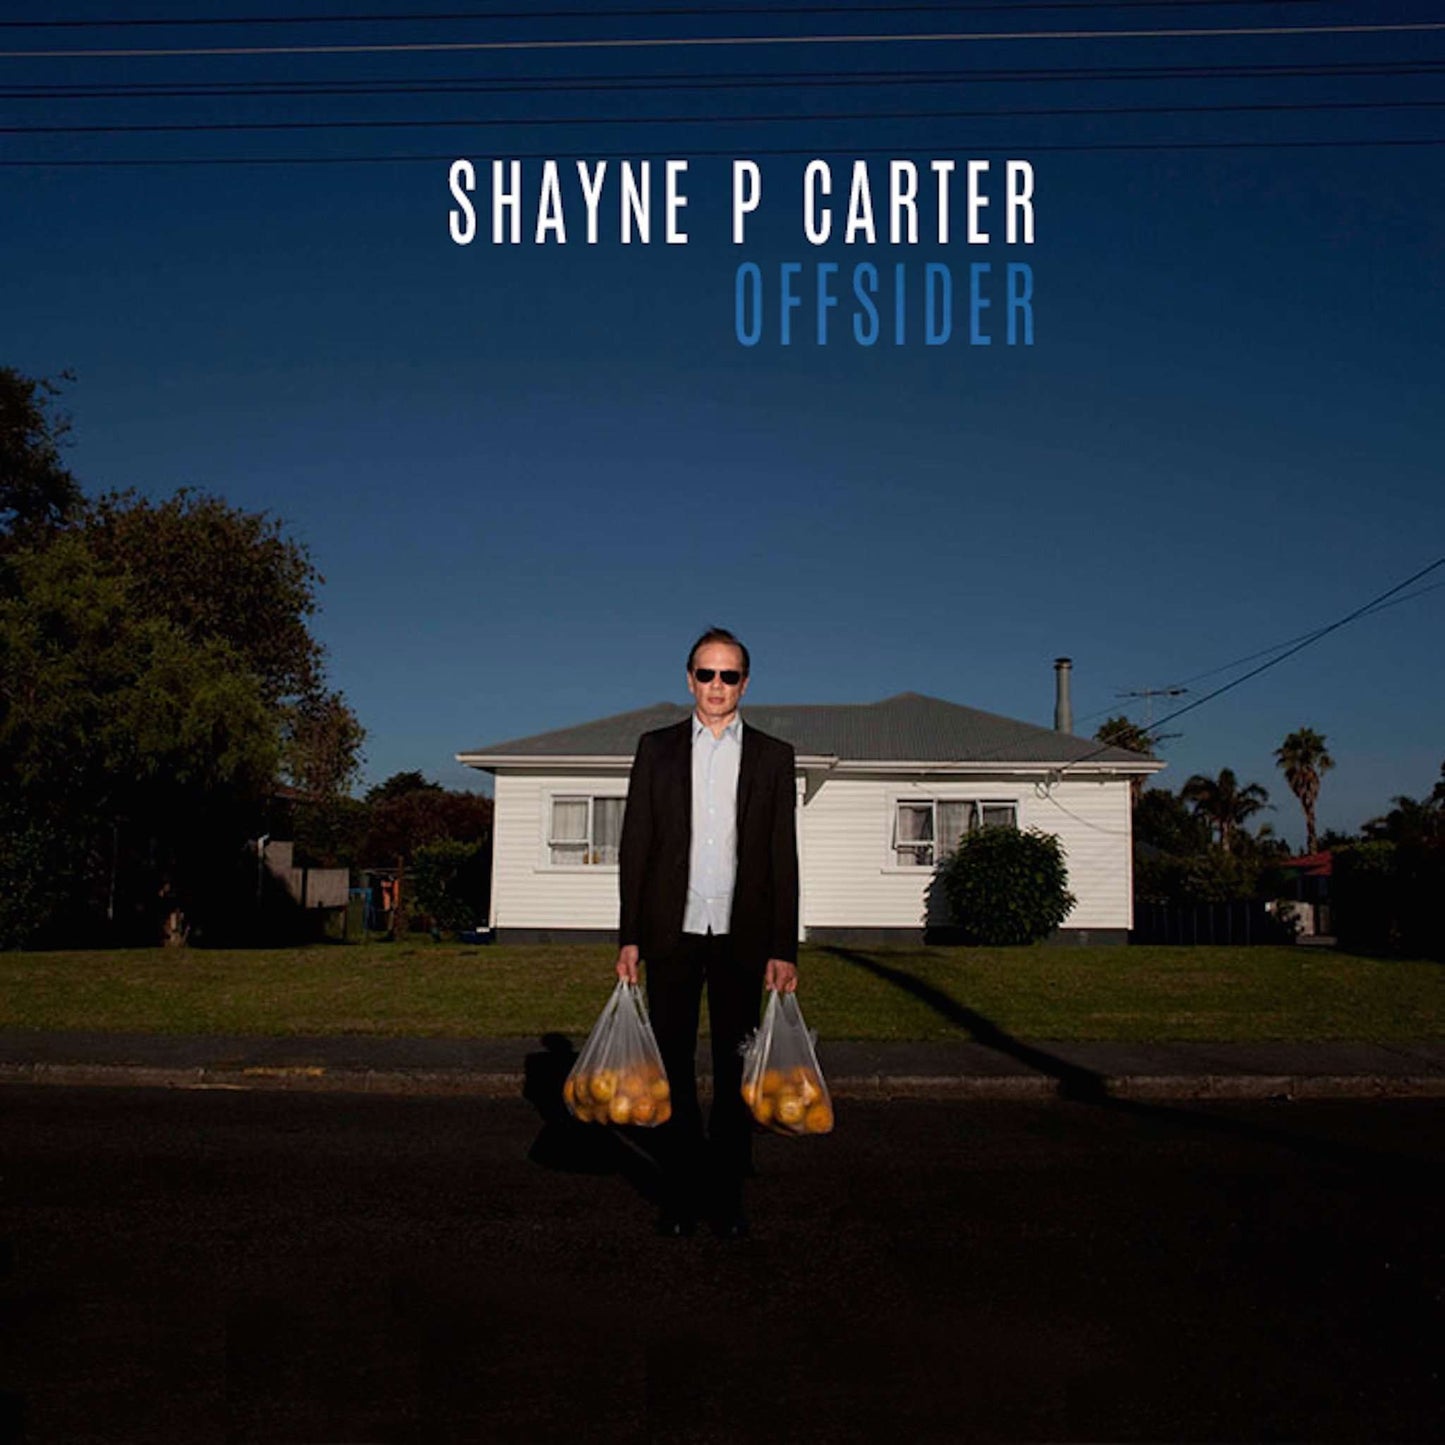 Shayne Carter or Shayne P. Carter, the album Offsider